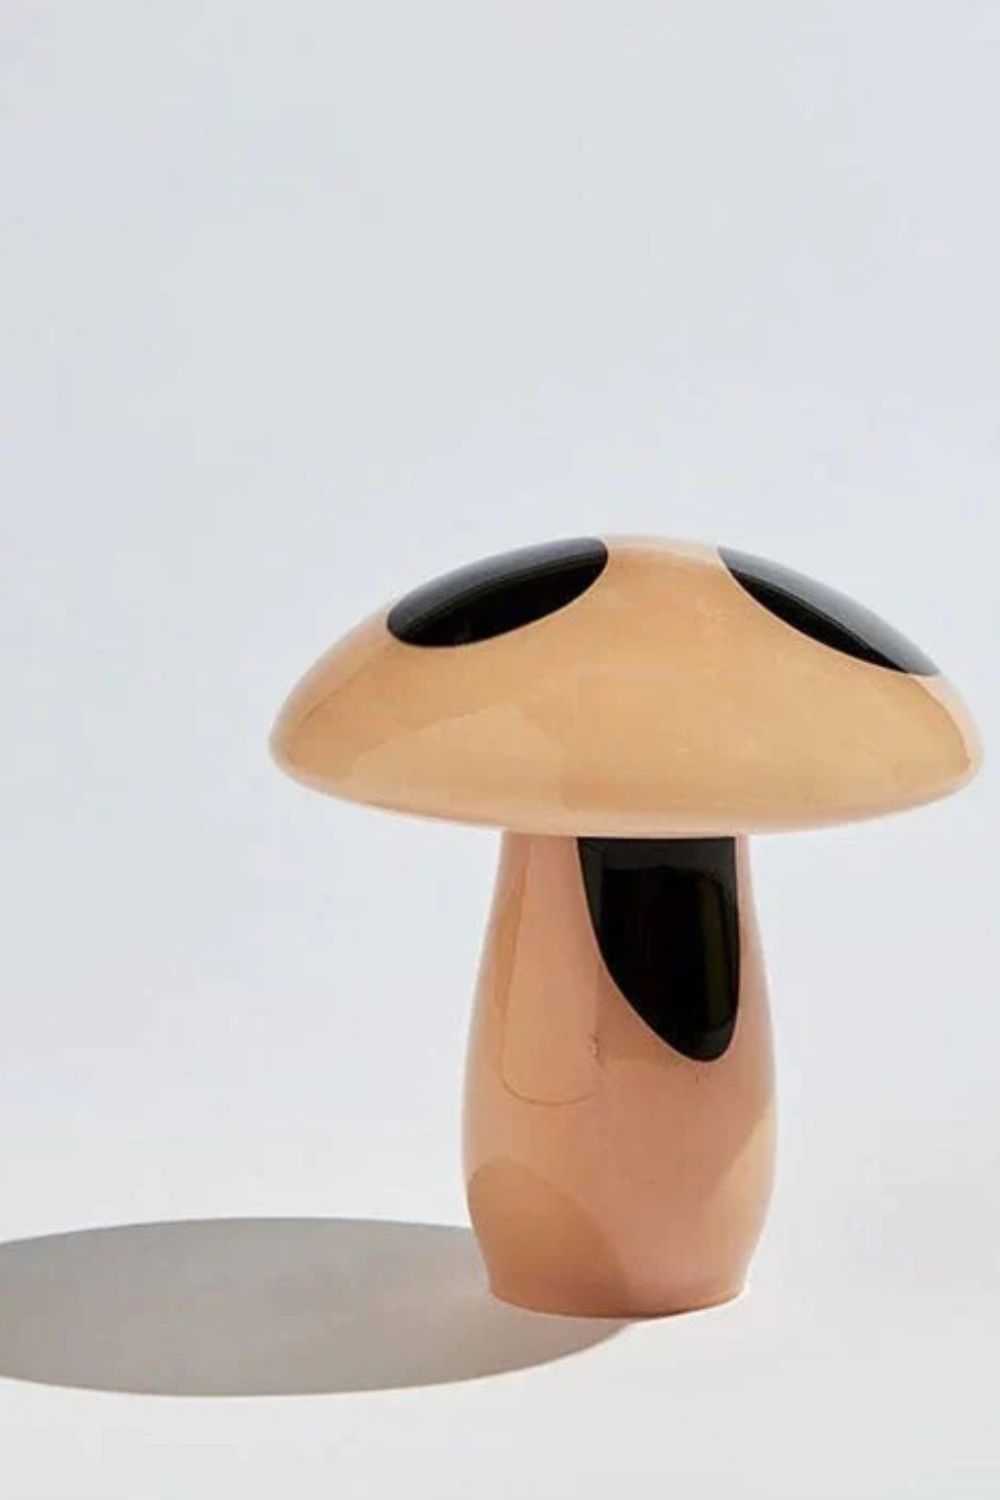 Ben david - mushroom spots sculpture - nude